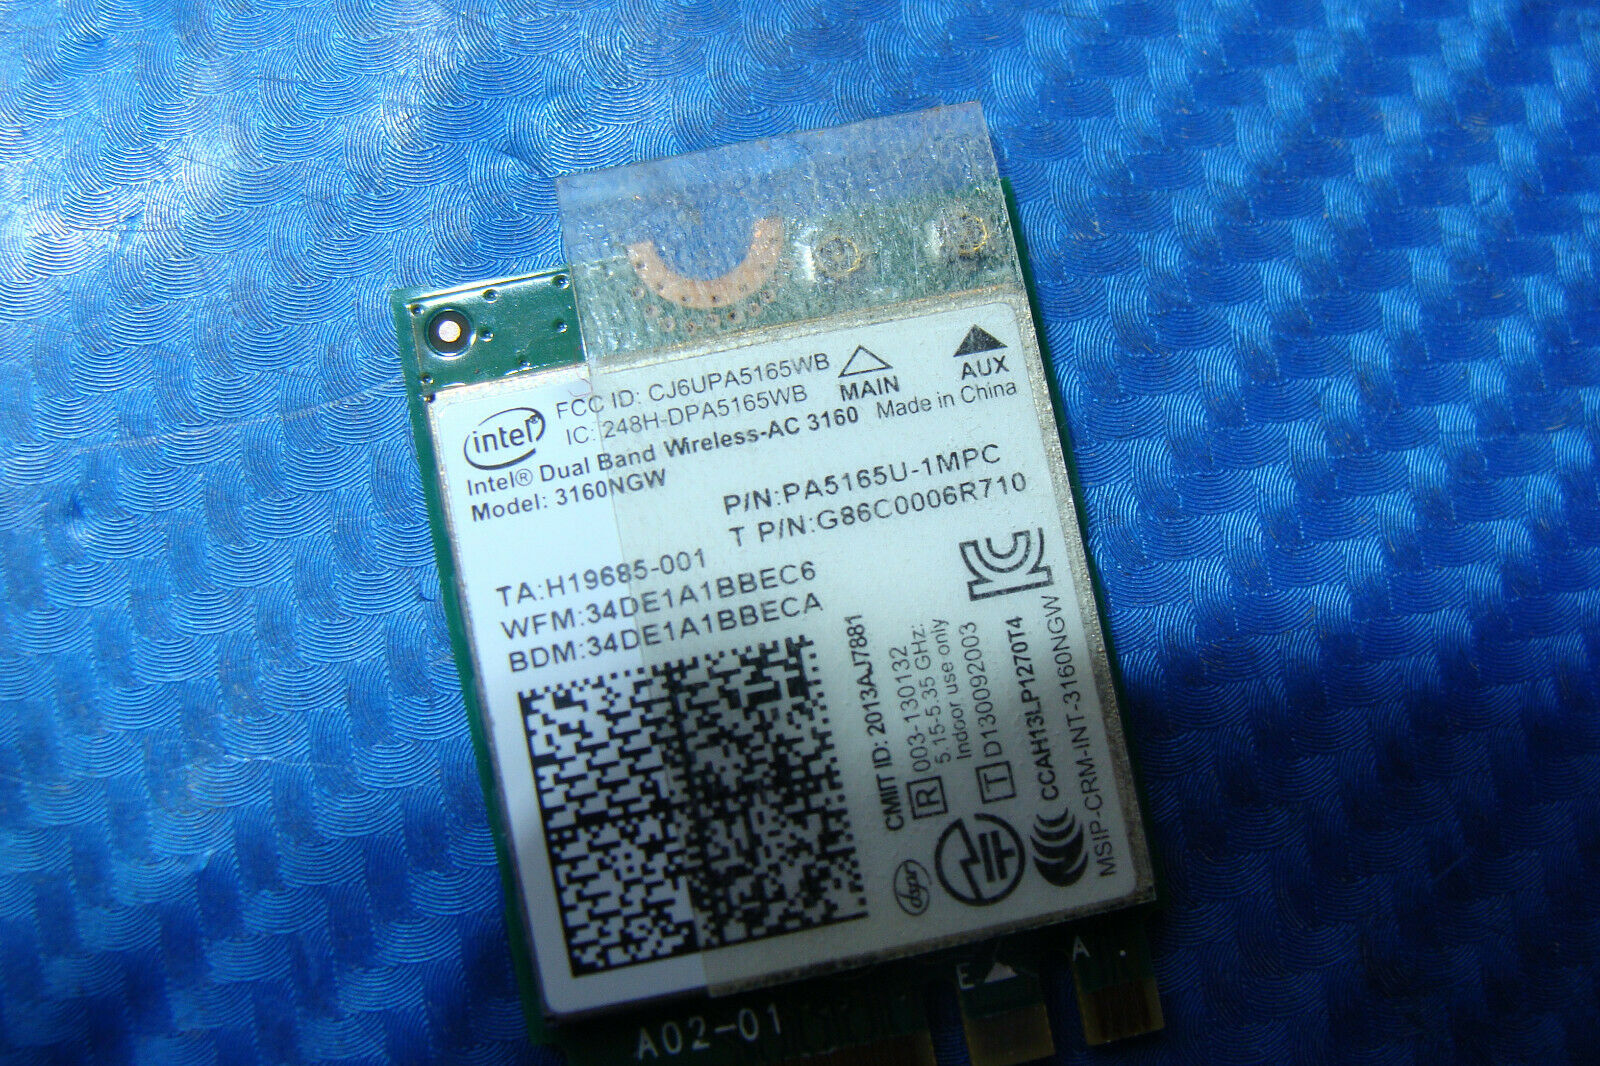 Toshiba Tecra C50-B1500 15.6